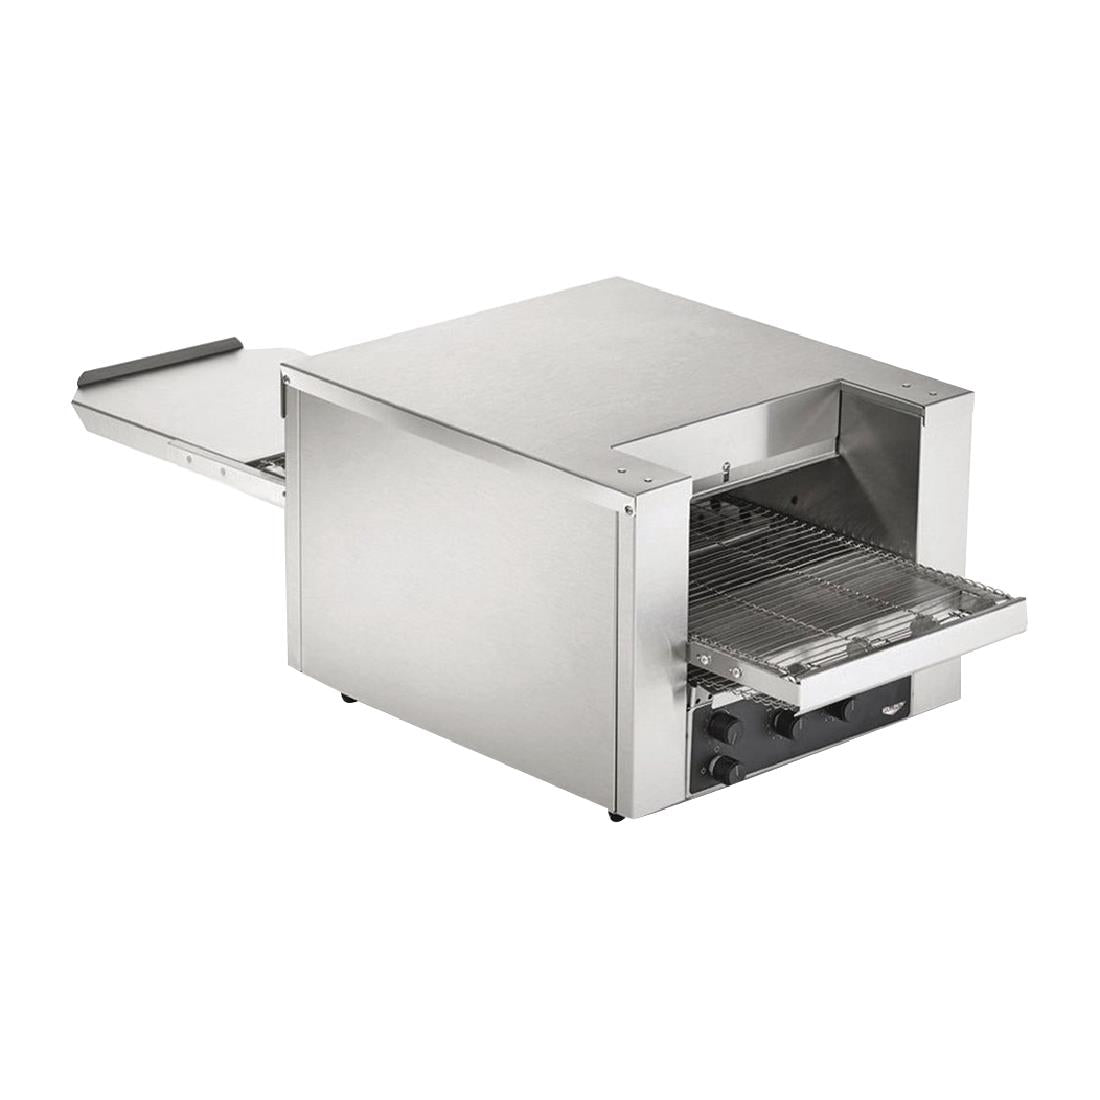 FP551 Vollrath Conveyor Sandwich Oven 267mm JD Catering Equipment Solutions Ltd